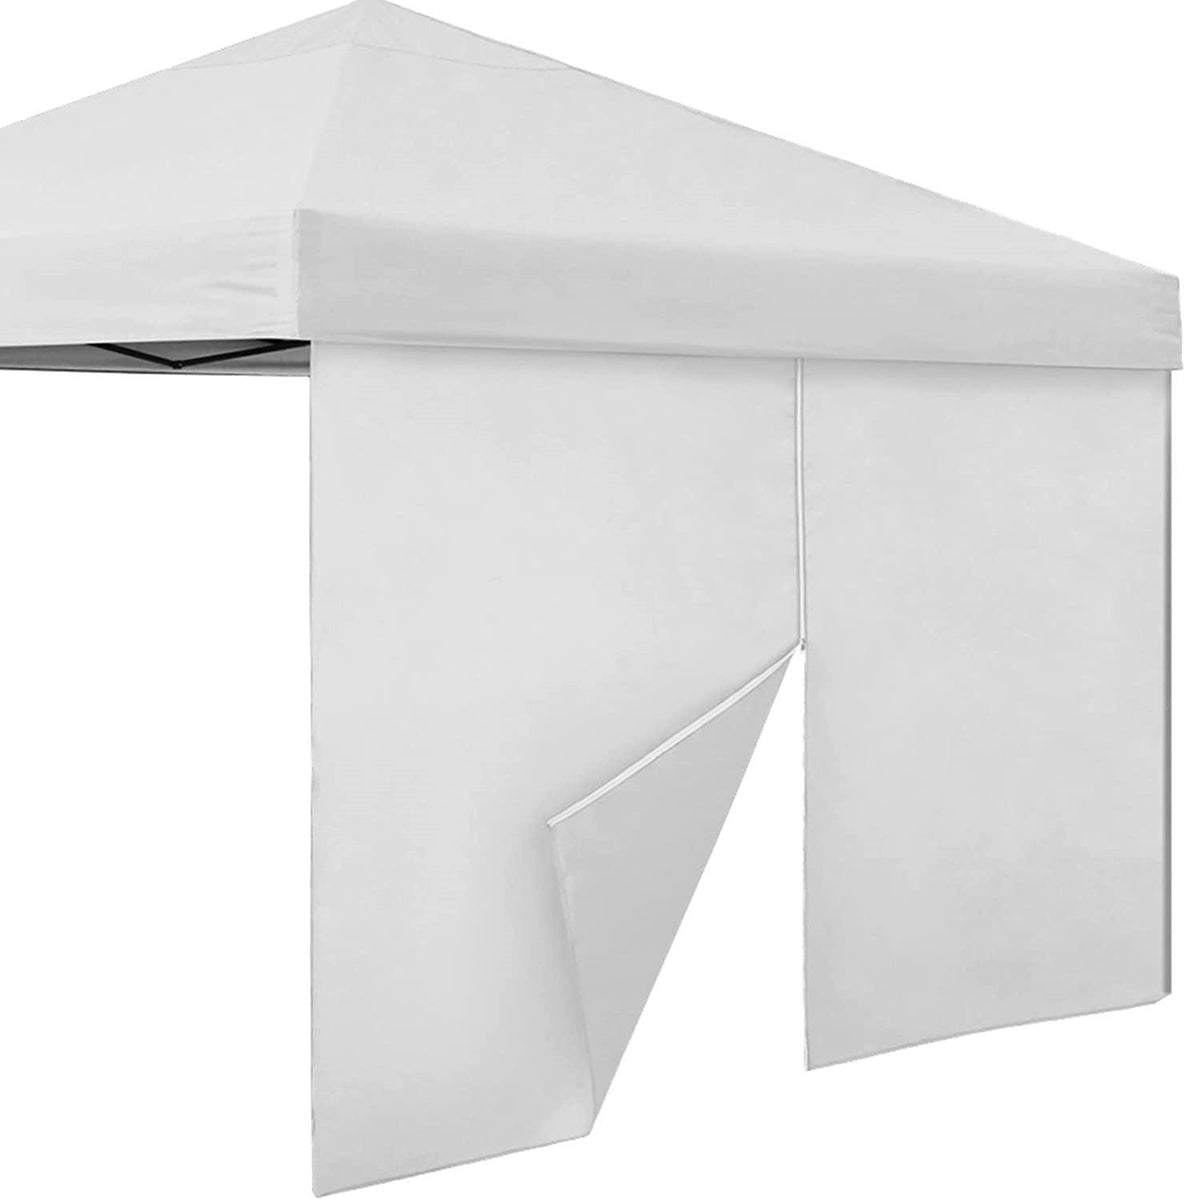 COBIZI Pop Up Canopy Sidewall Instant Canopy Wall 10'X10' with Zipper - COBIZI